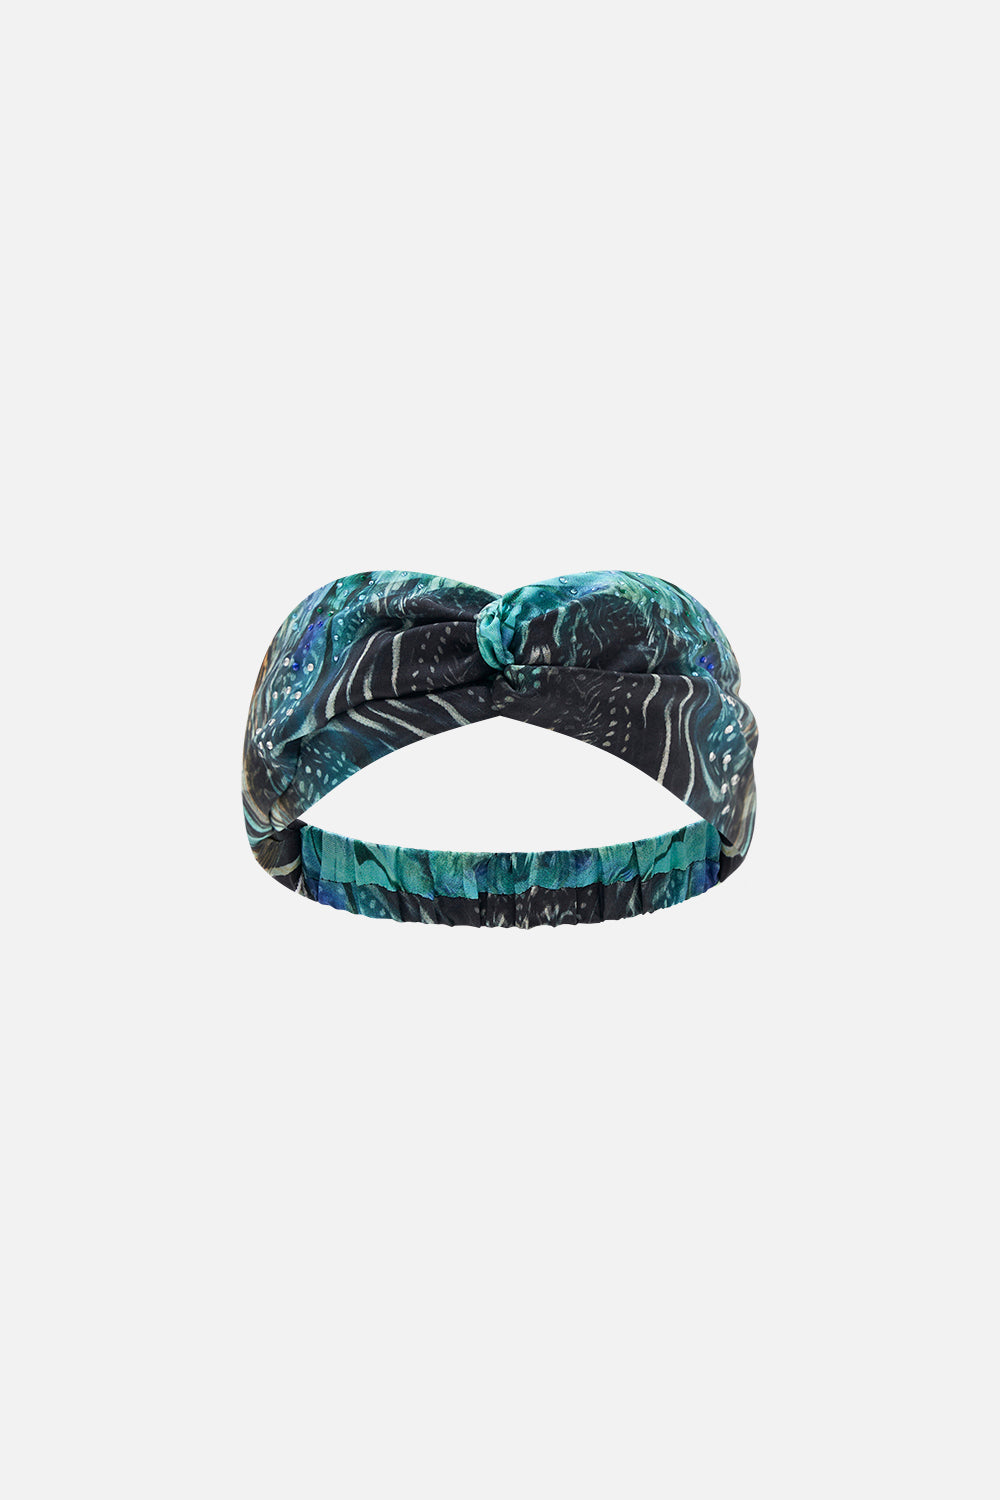 Product view of CAMILLA silk headband in Azure Alllure print